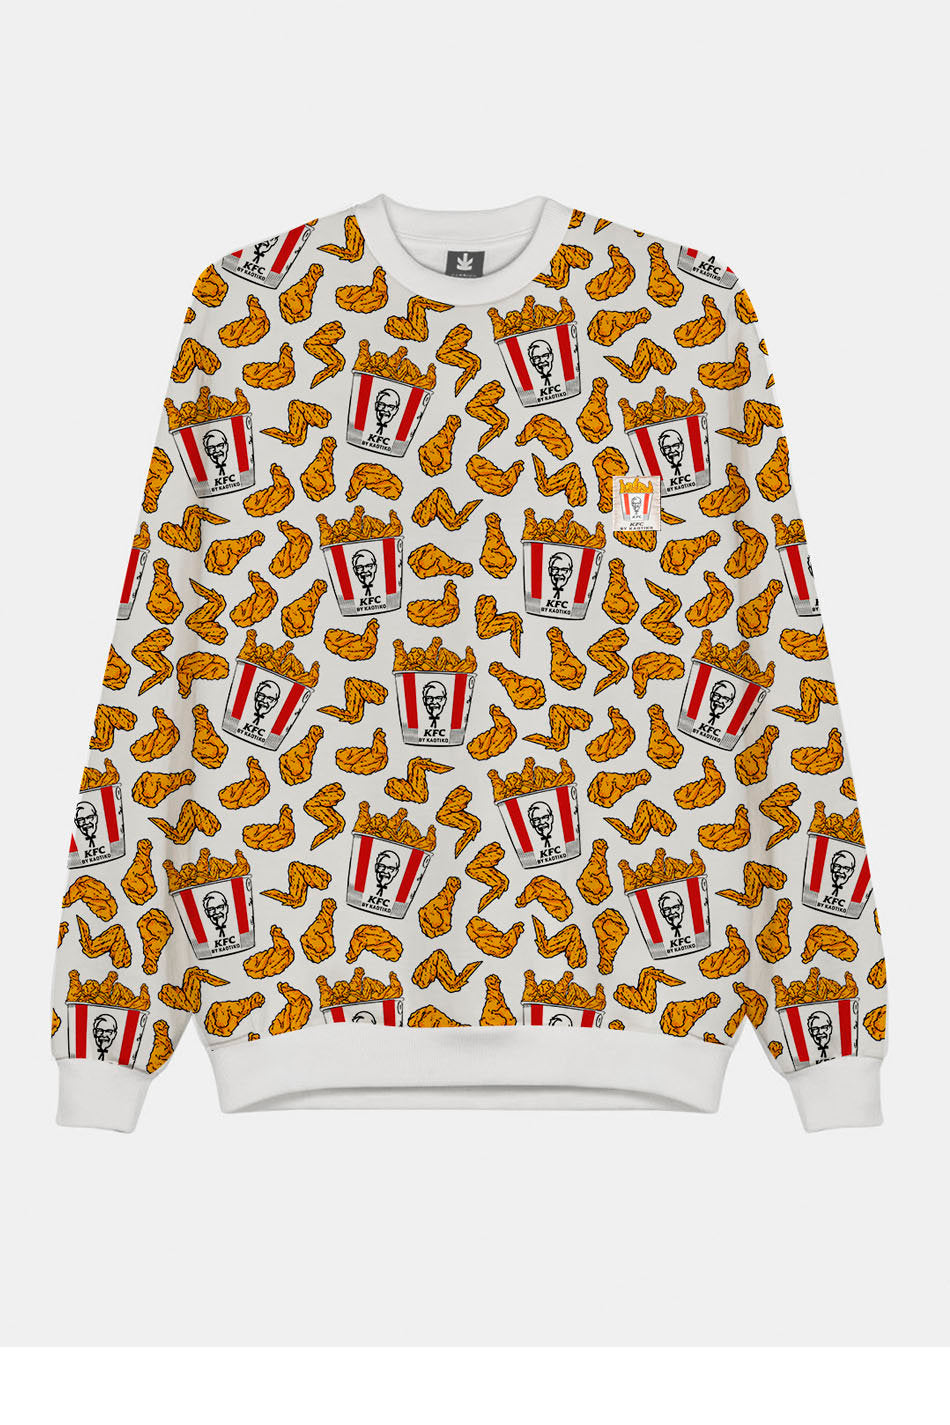 KFC Sweatshirt by Kaotiko